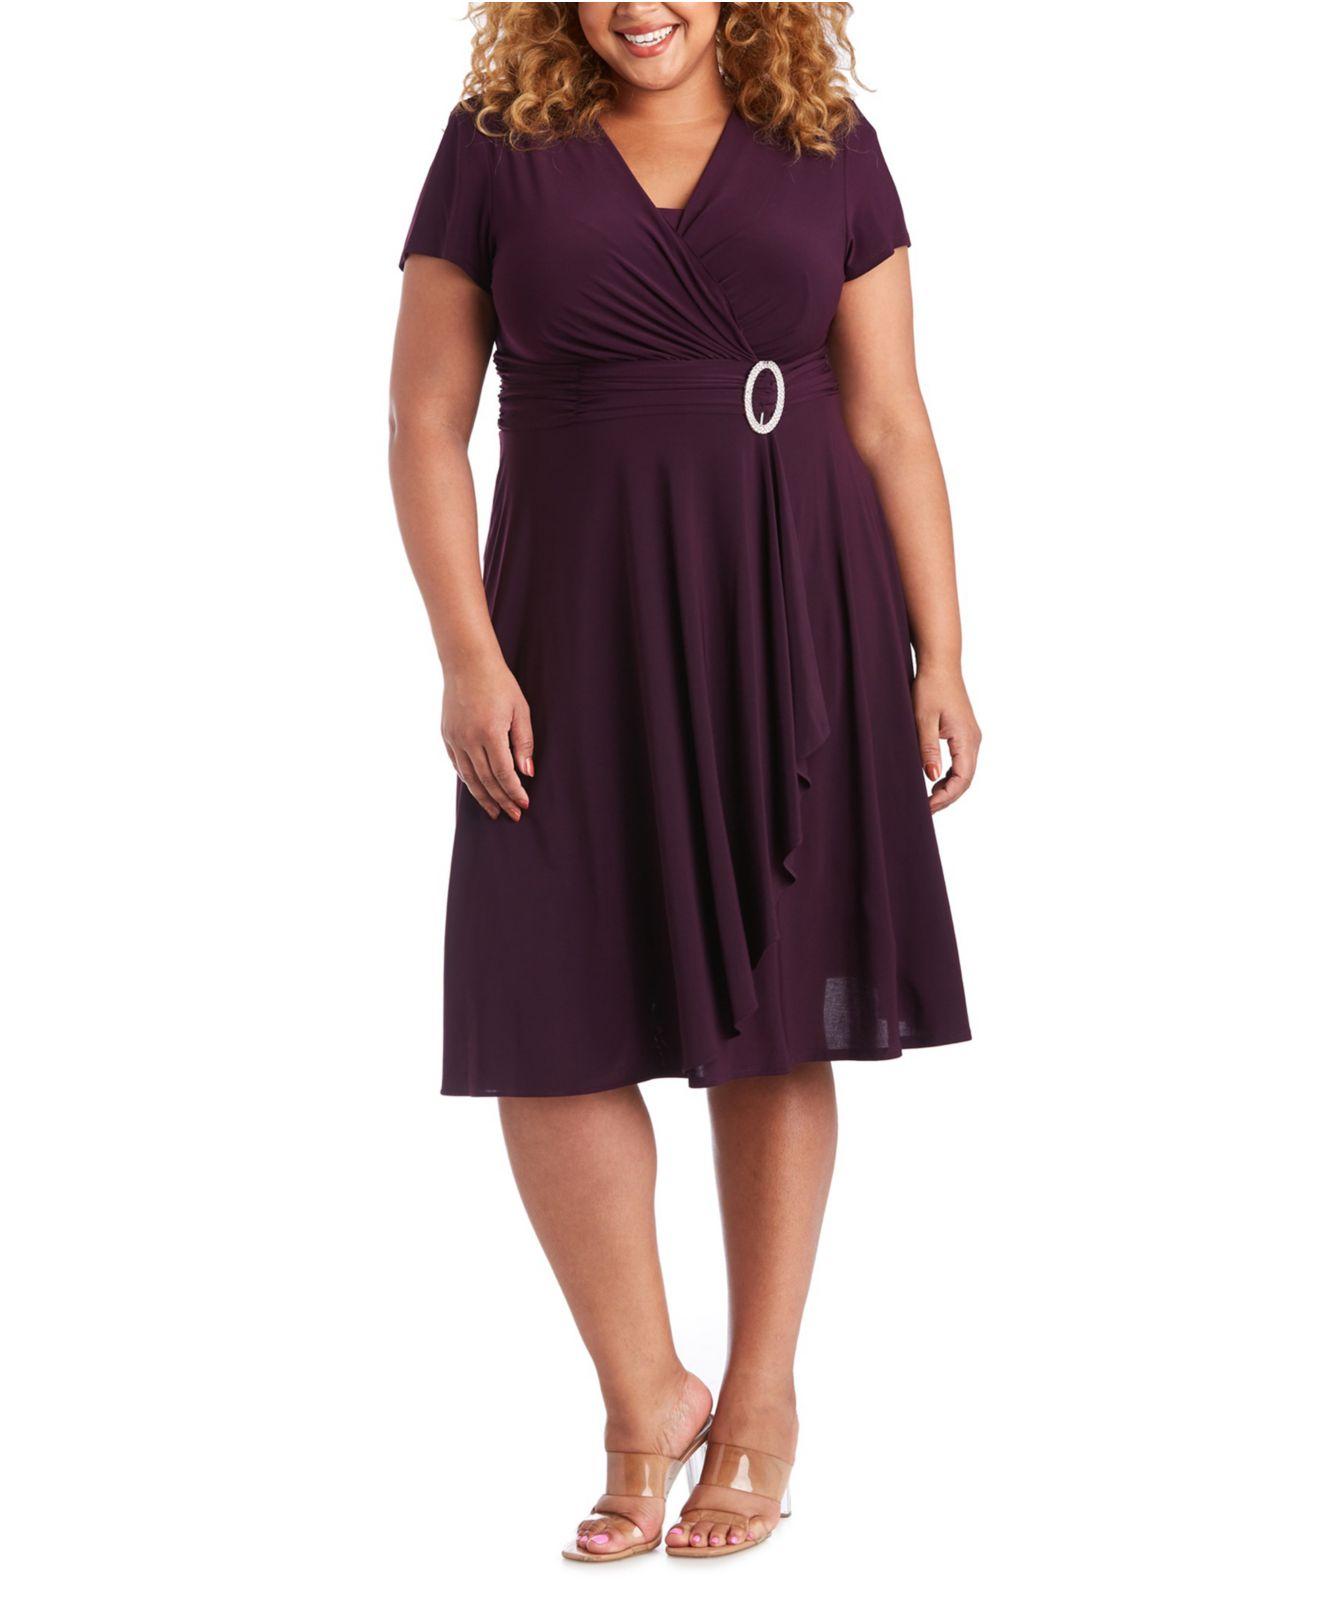 R & M Richards Synthetic Plus Size Cascade Dress in Plum (Purple) - Lyst